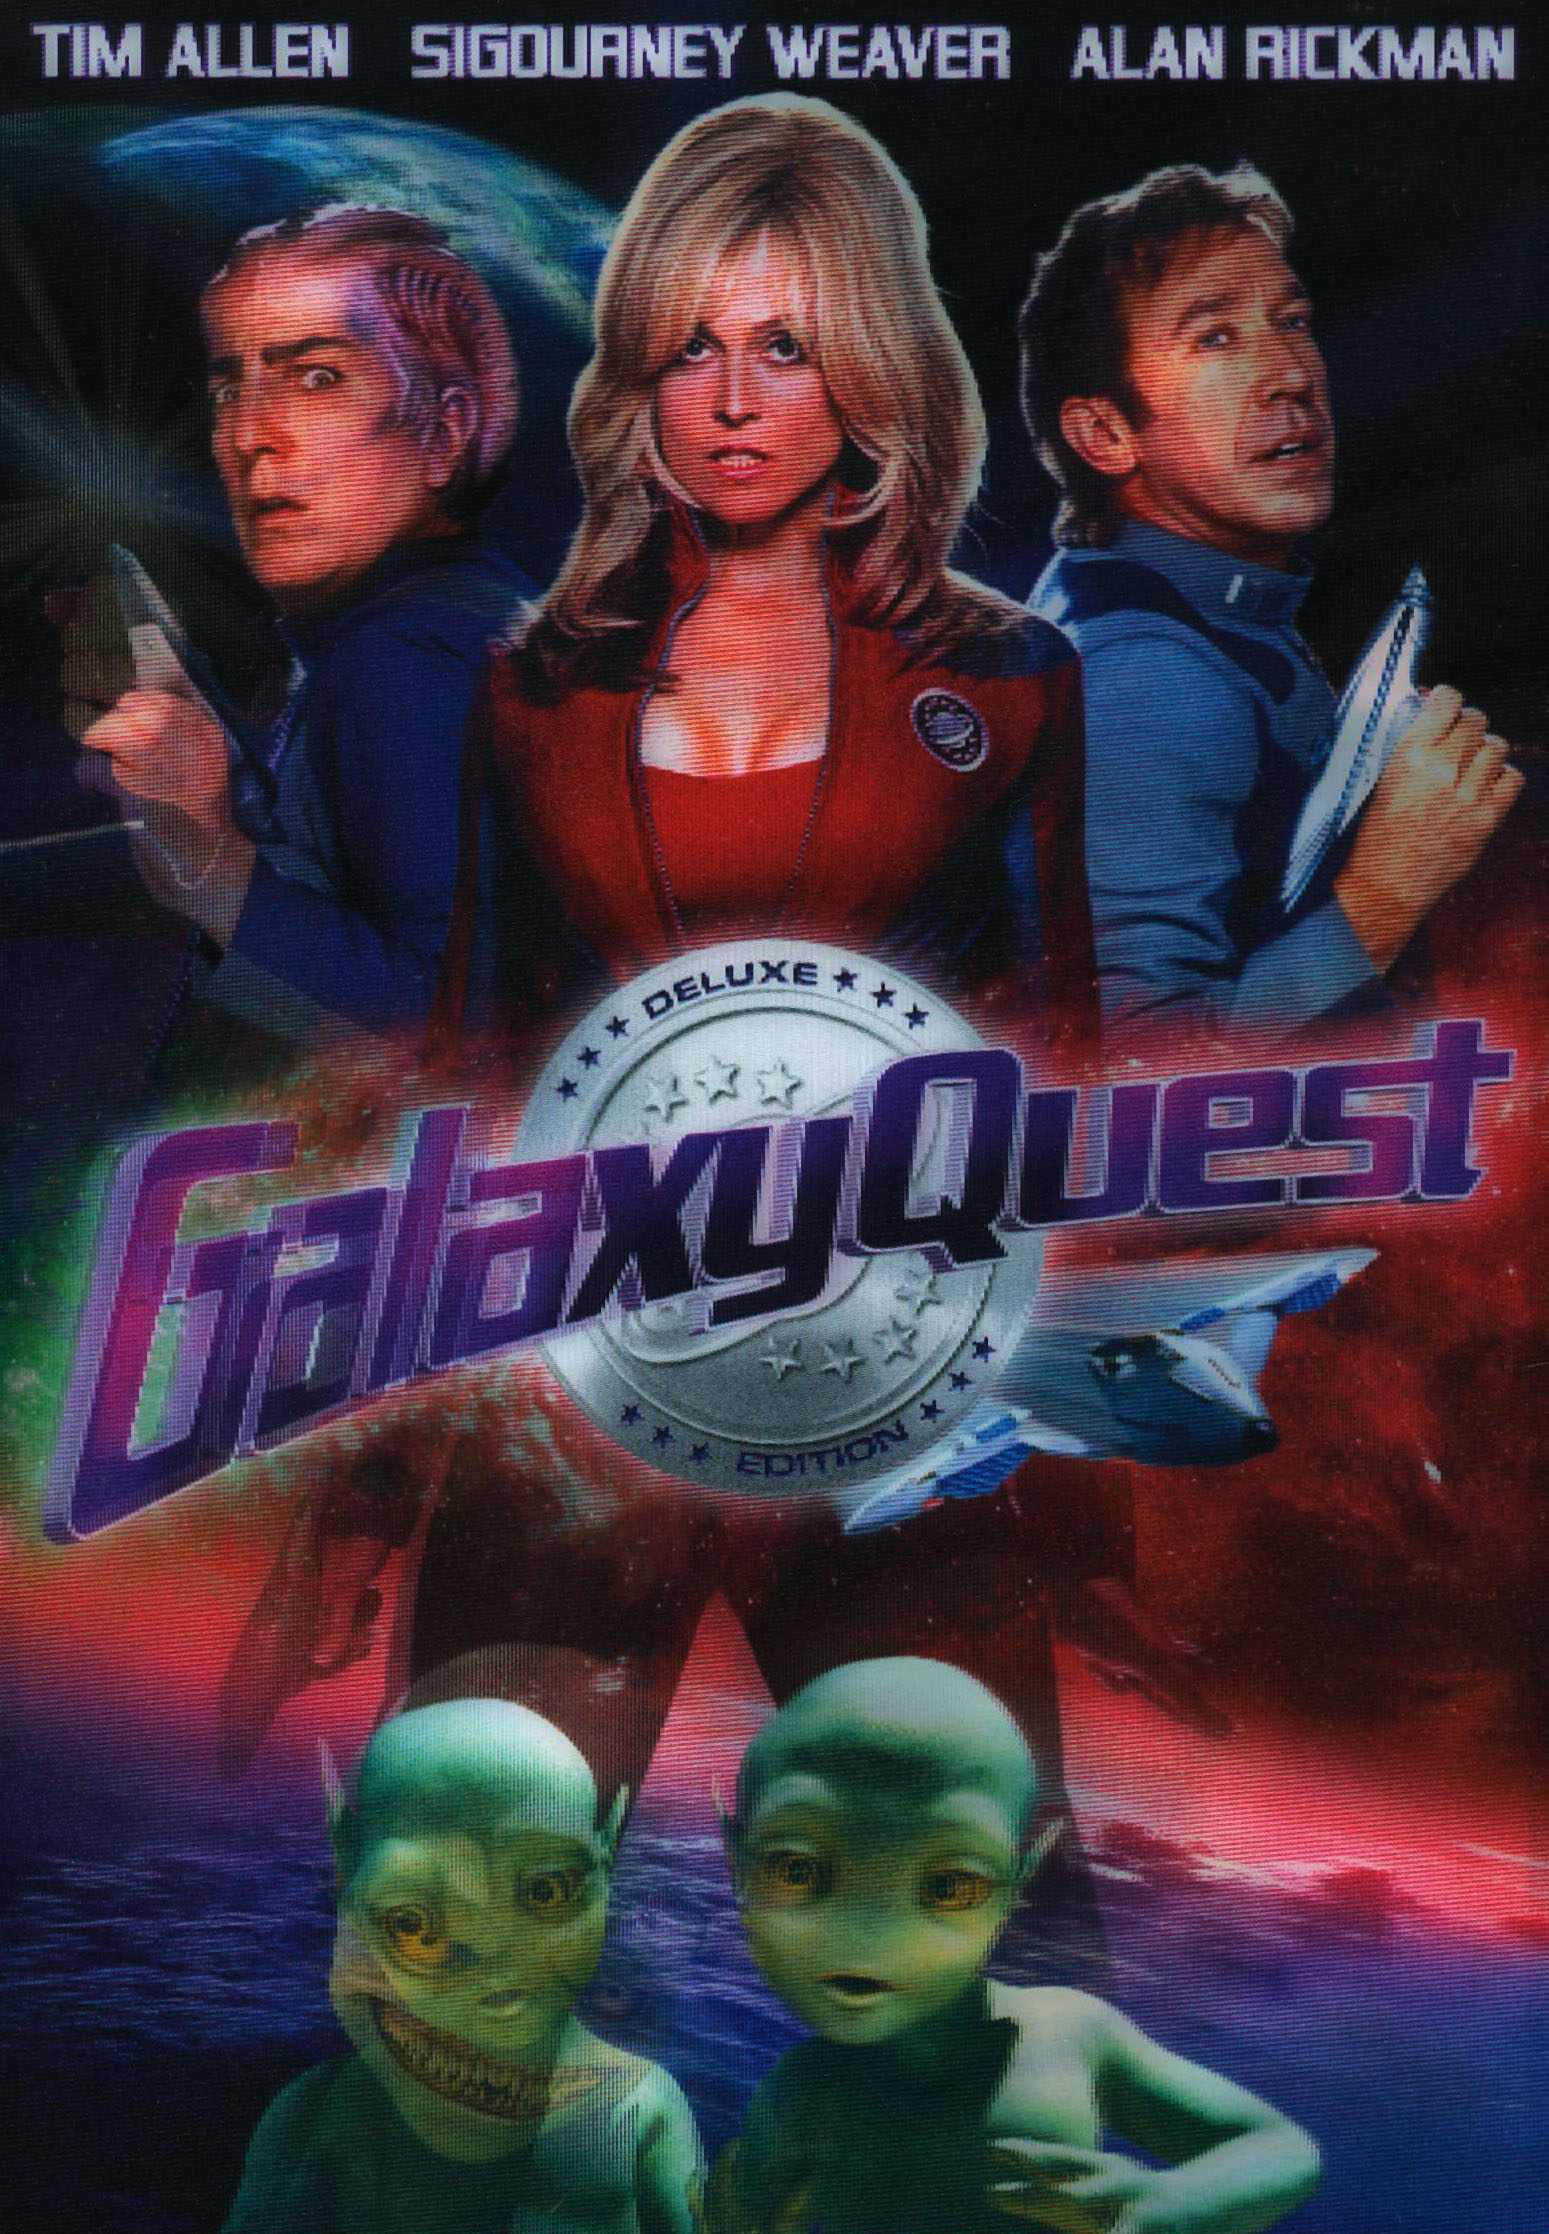 sigourney weaver galaxy quest shirt ripped